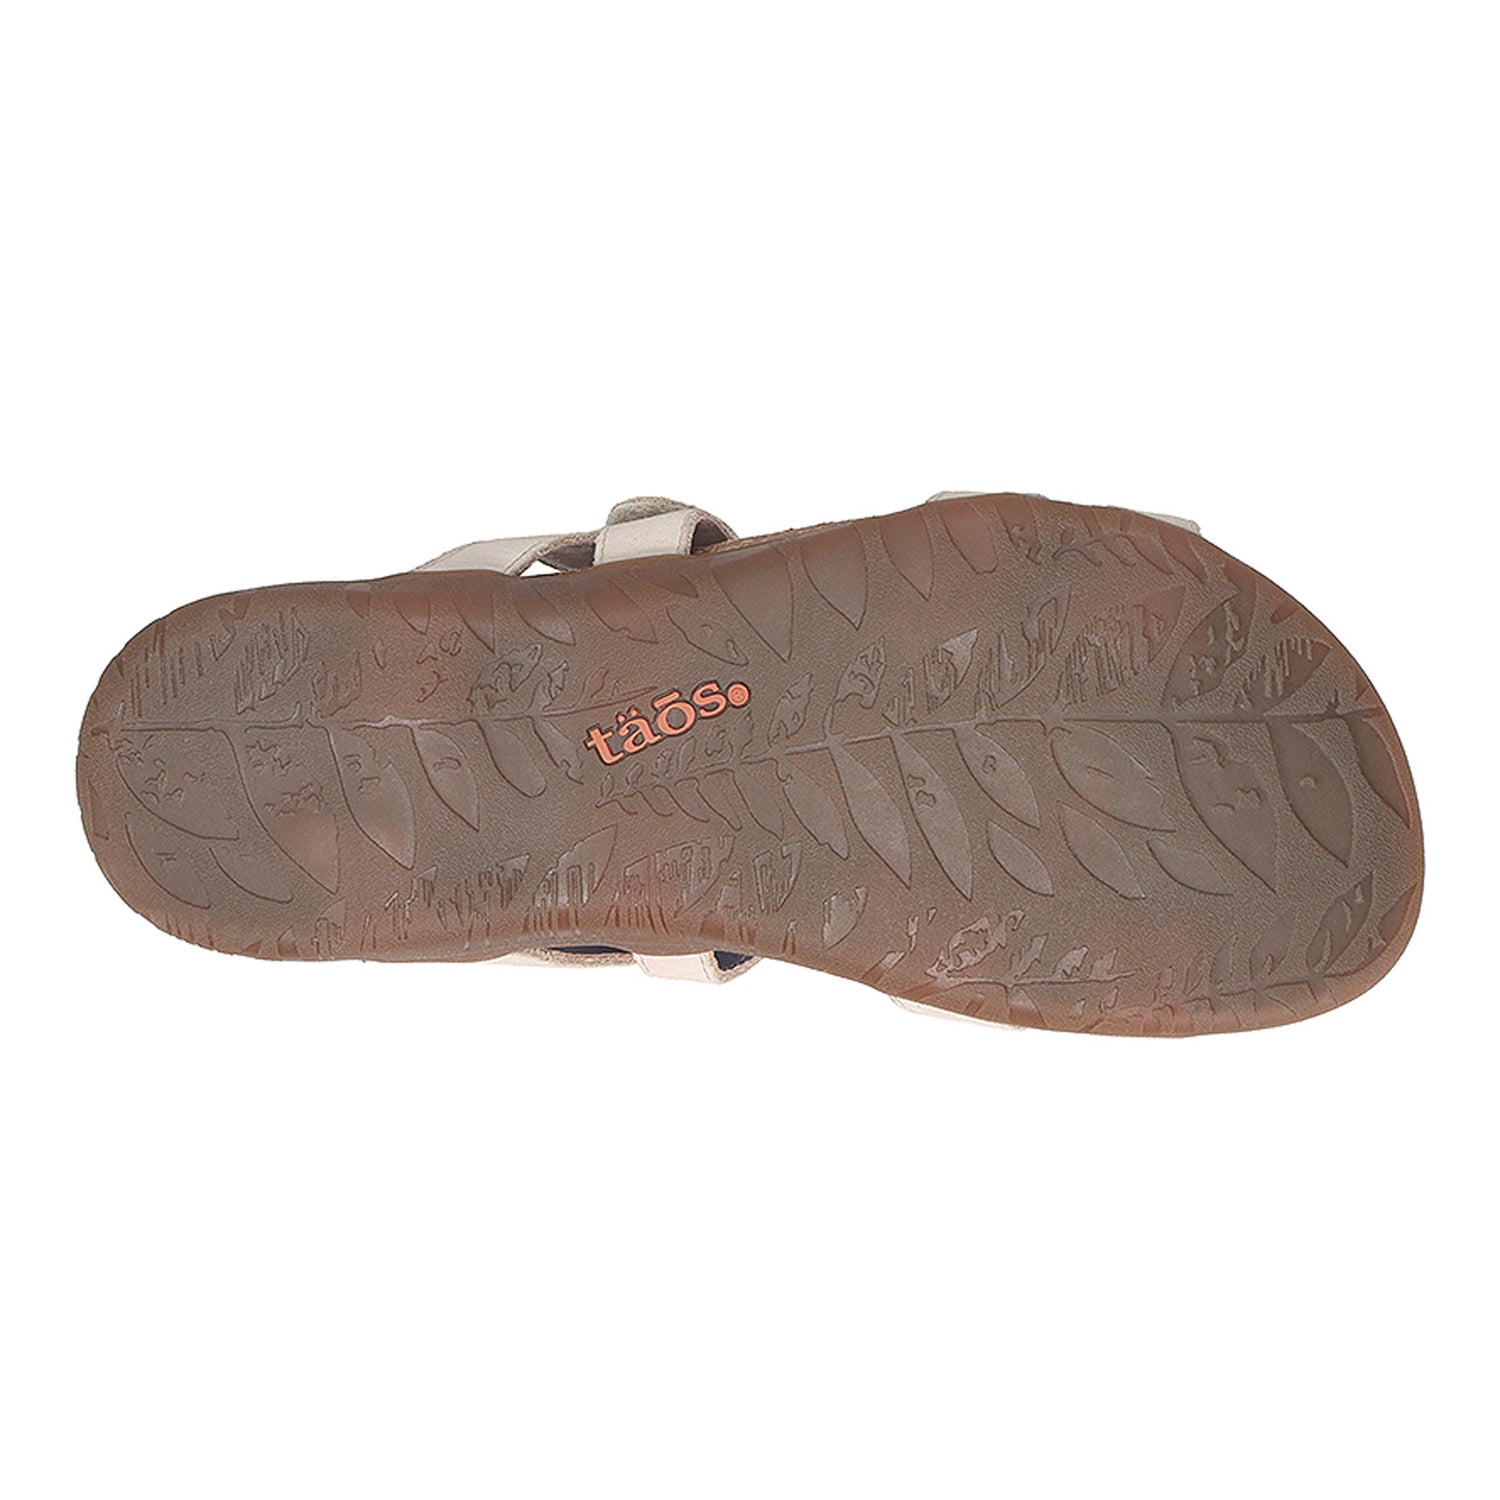 Peltz Shoes  Women's Taos Bandalero Sandal Stone Nubuck BLR-14166-STON